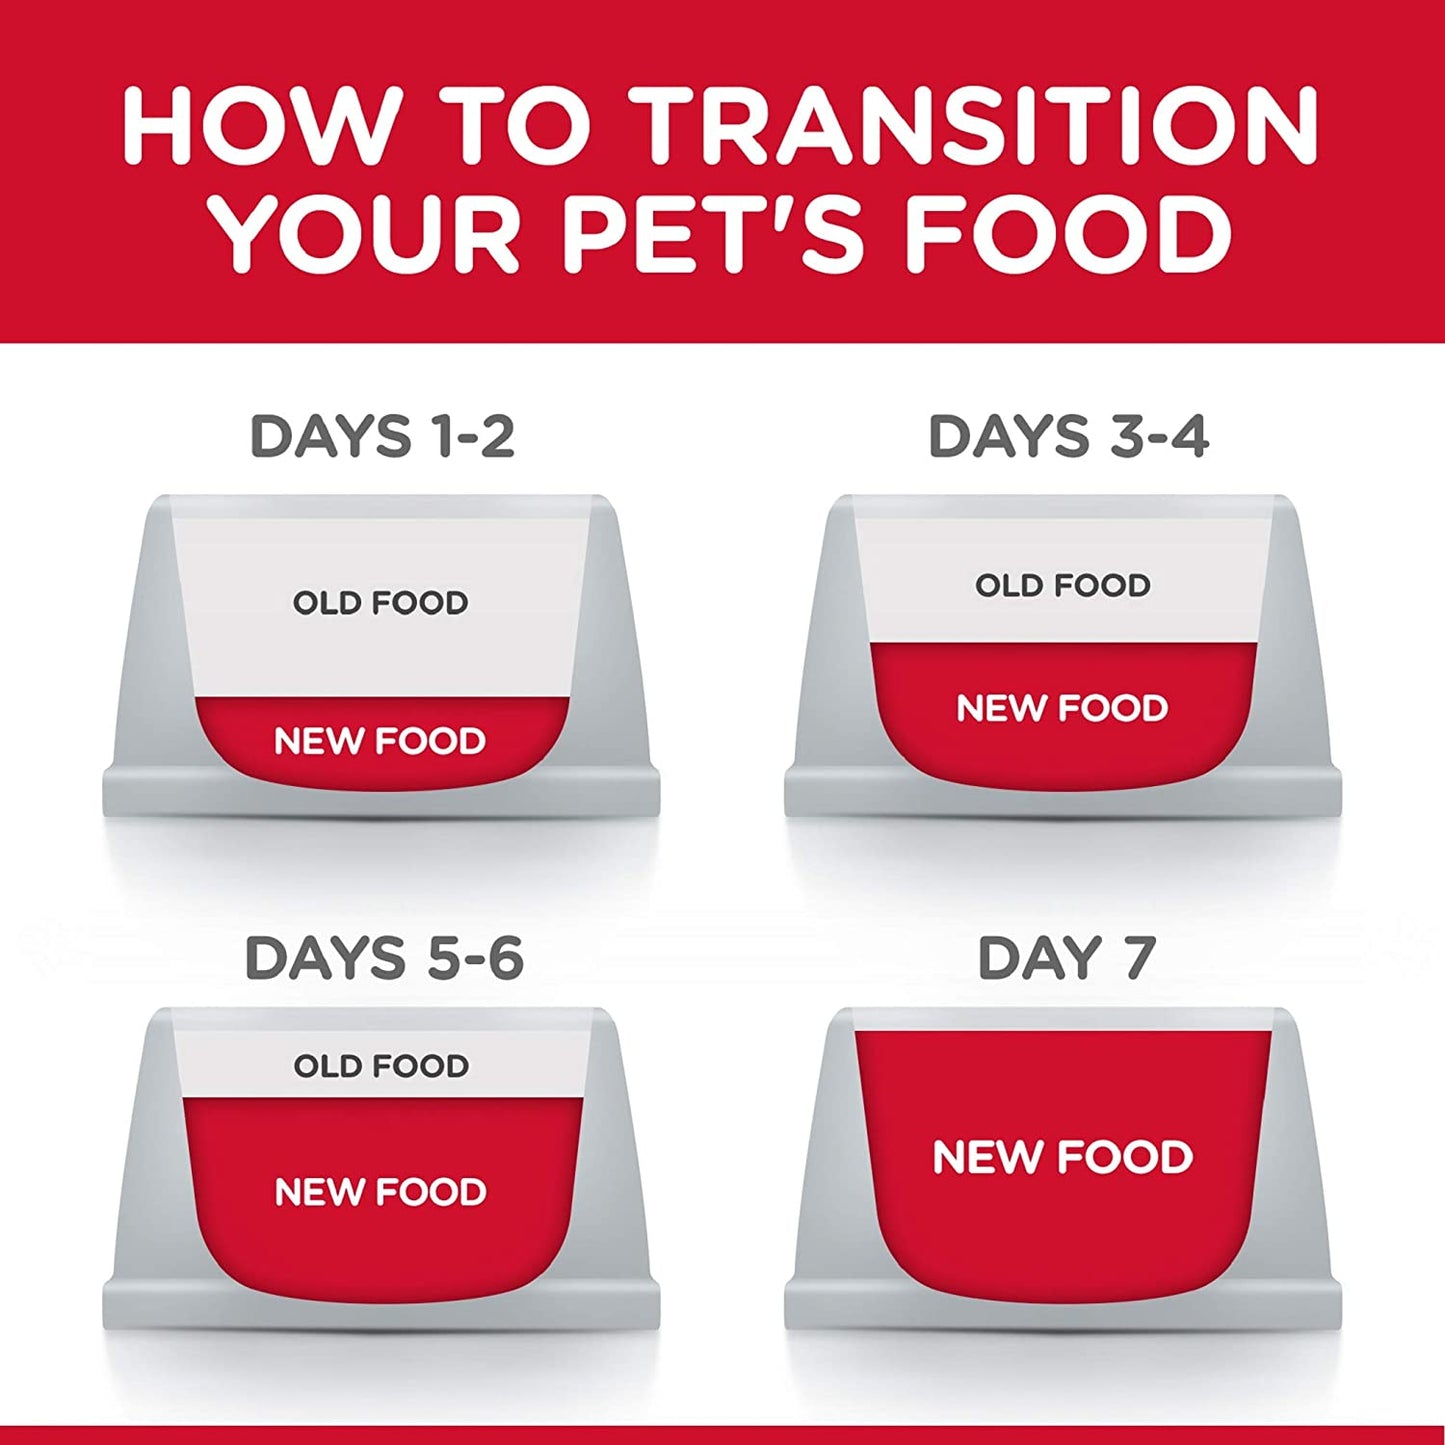 Hill's Science Diet Adult Indoor cat food  Cat Food  | PetMax Canada